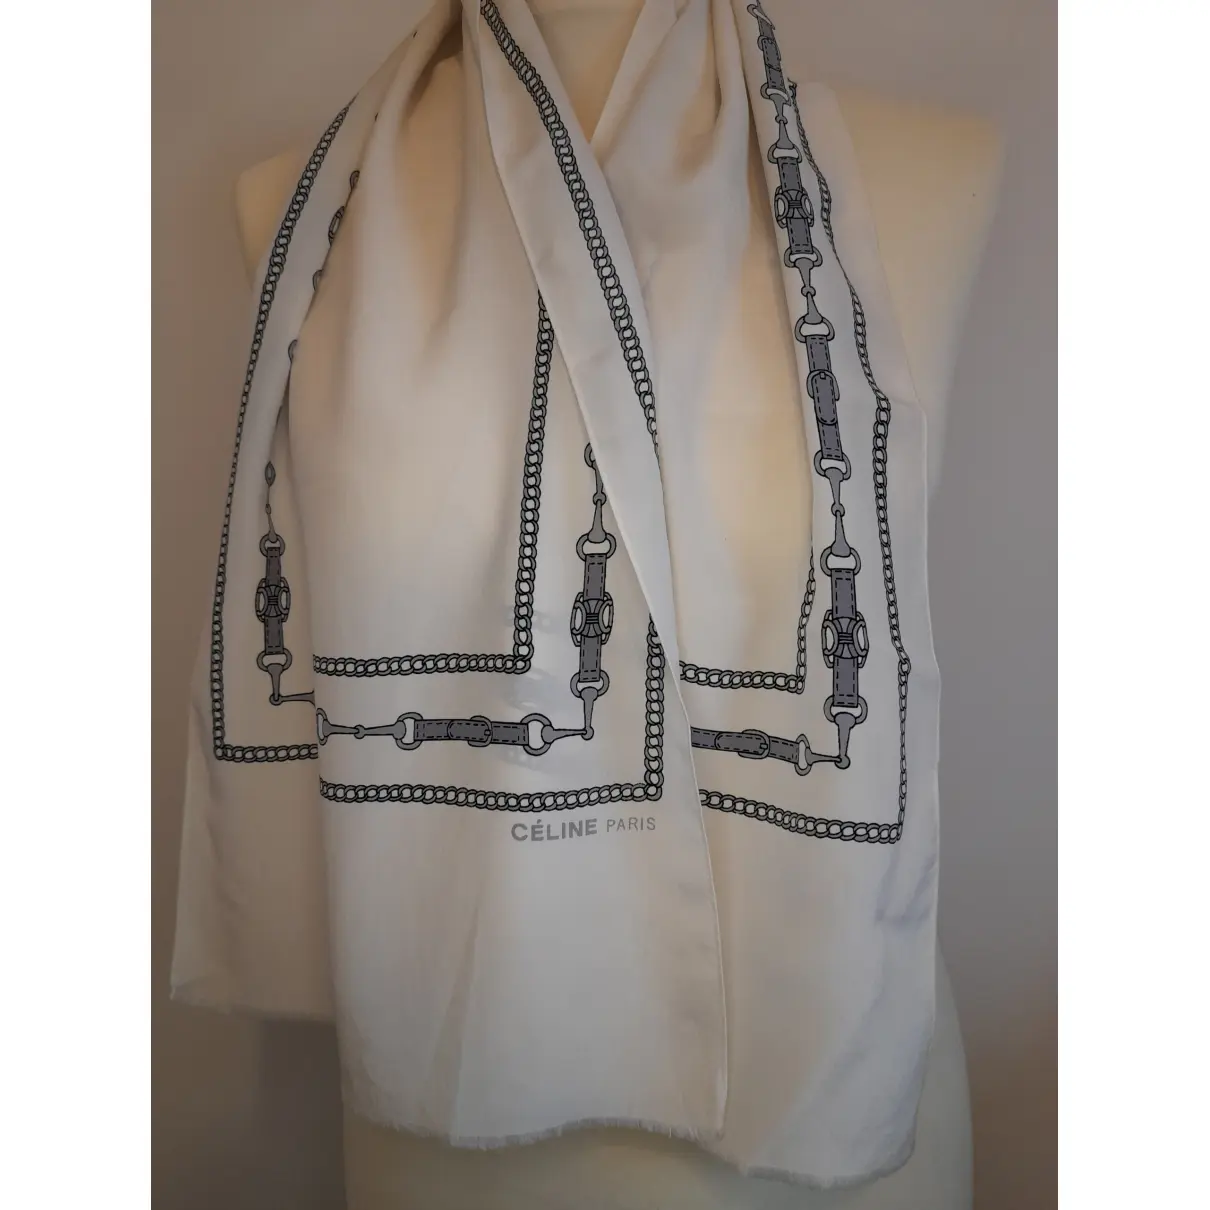 Buy Celine Silk scarf online - Vintage